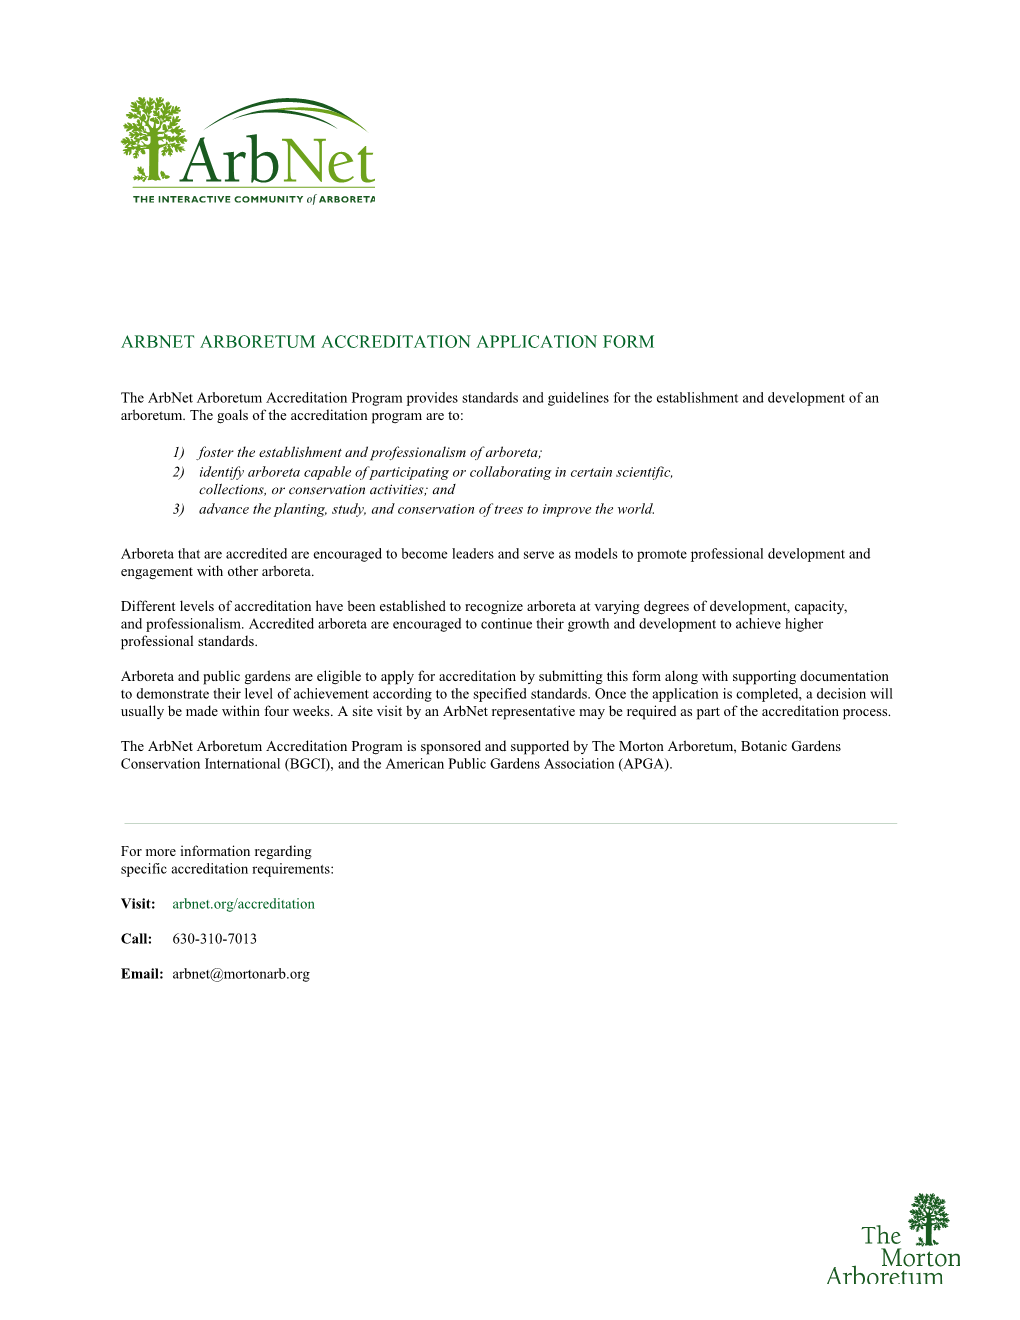 Arbnet Arboretum Accreditation Application Form